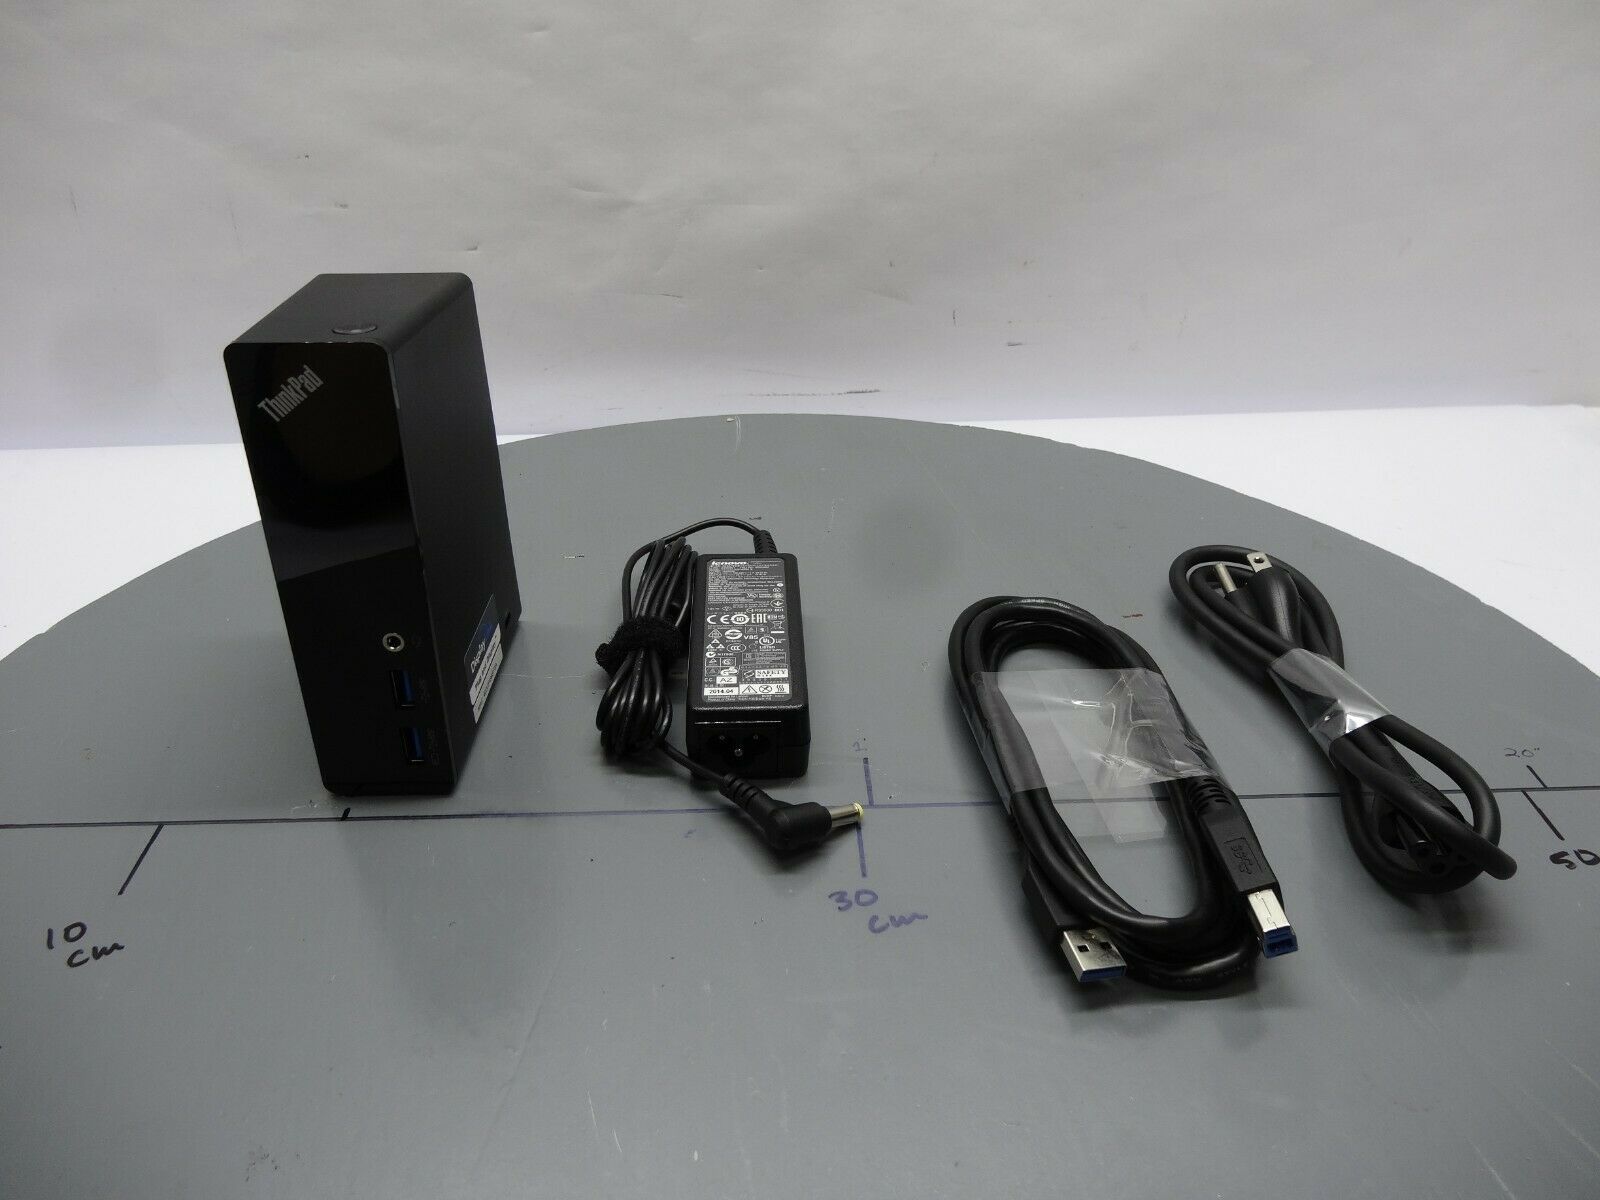 Lenovo DL3700-ESS USB3.0 Docking Station - $74.99